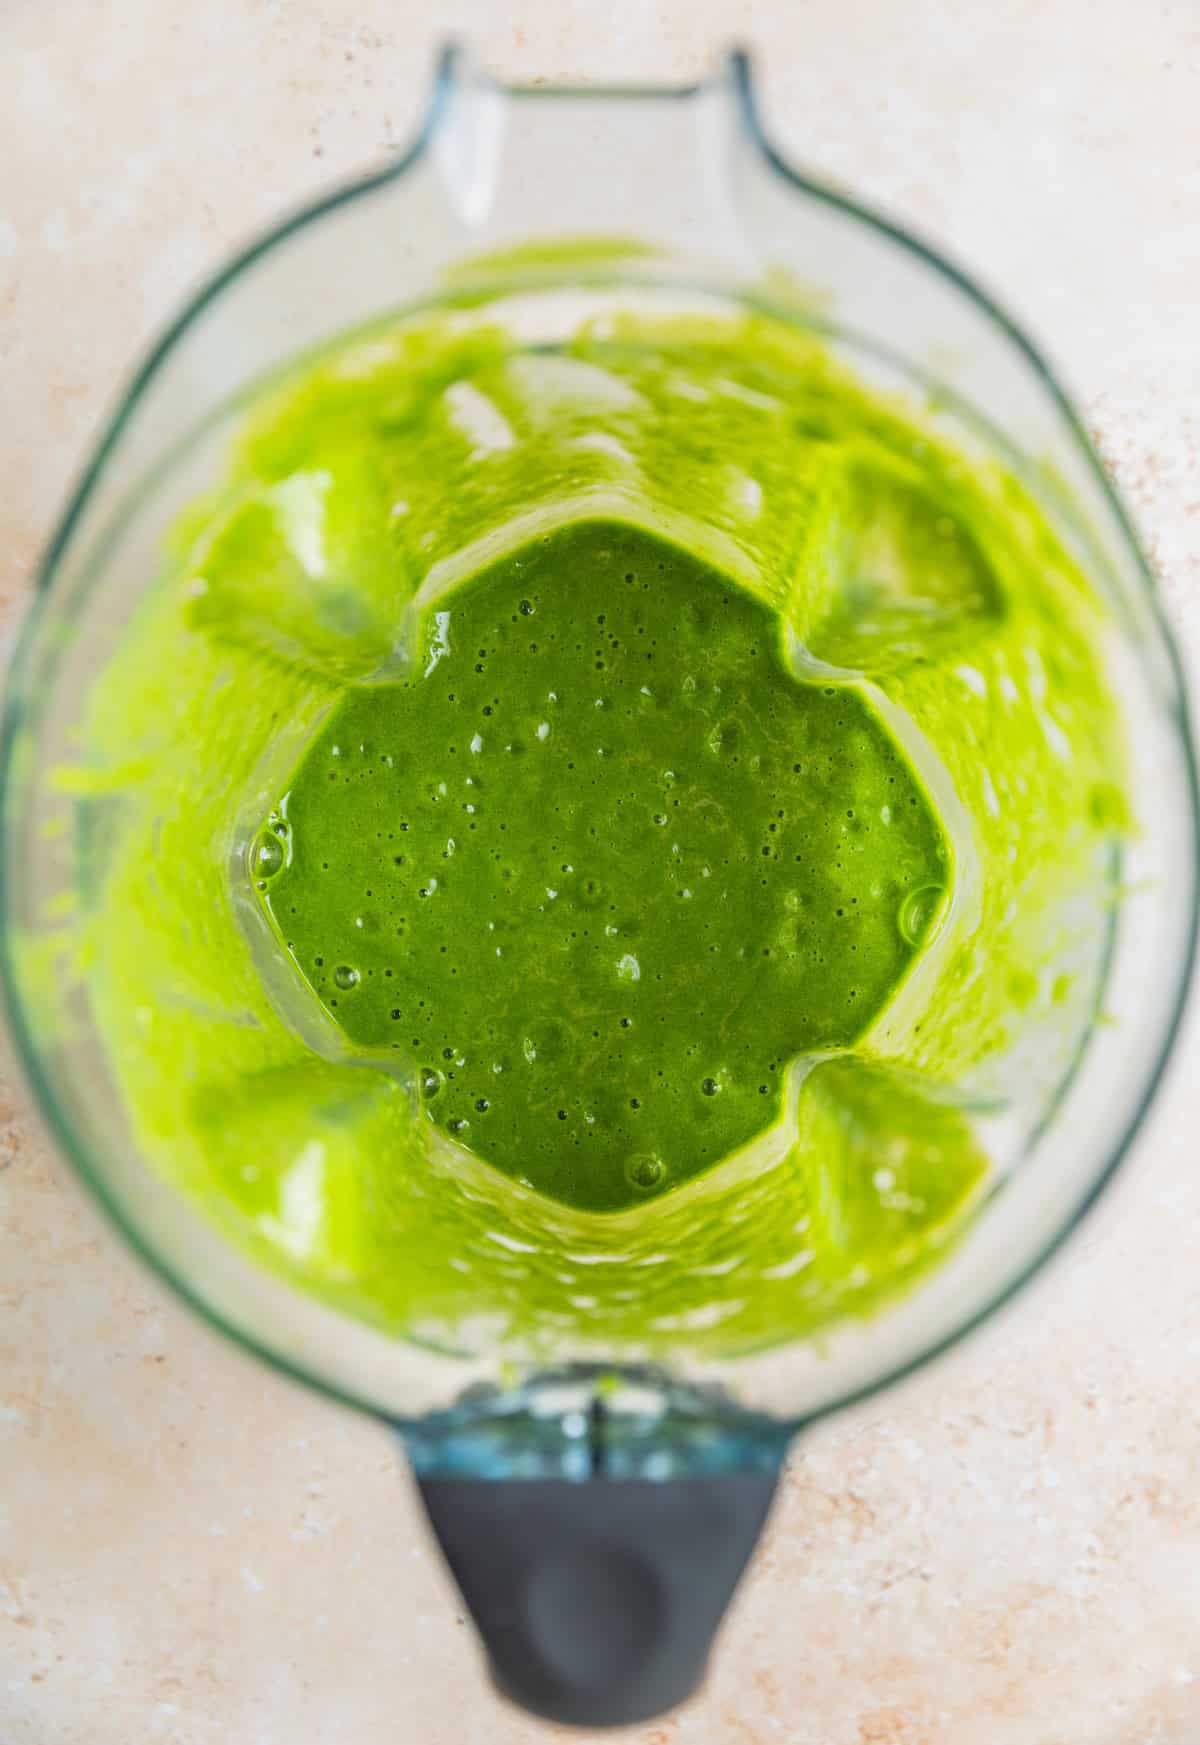 Blended green smoothie ingredients in blender.